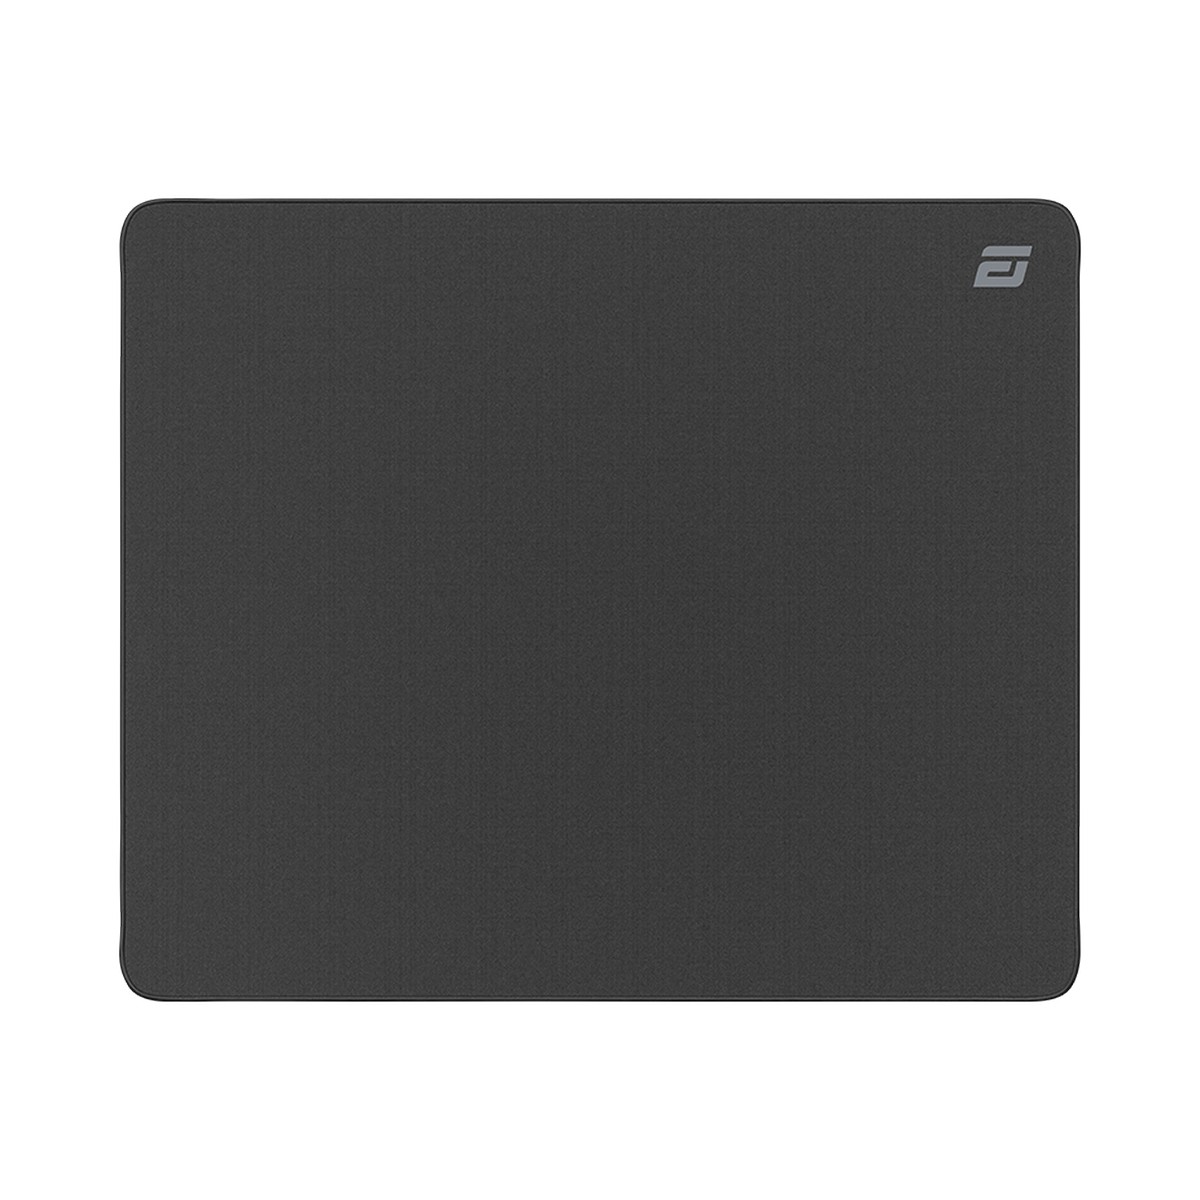 Endgame Gear EM-C L Gaming Surface 490x410x3mm (EGG-EMC-490-BLK)